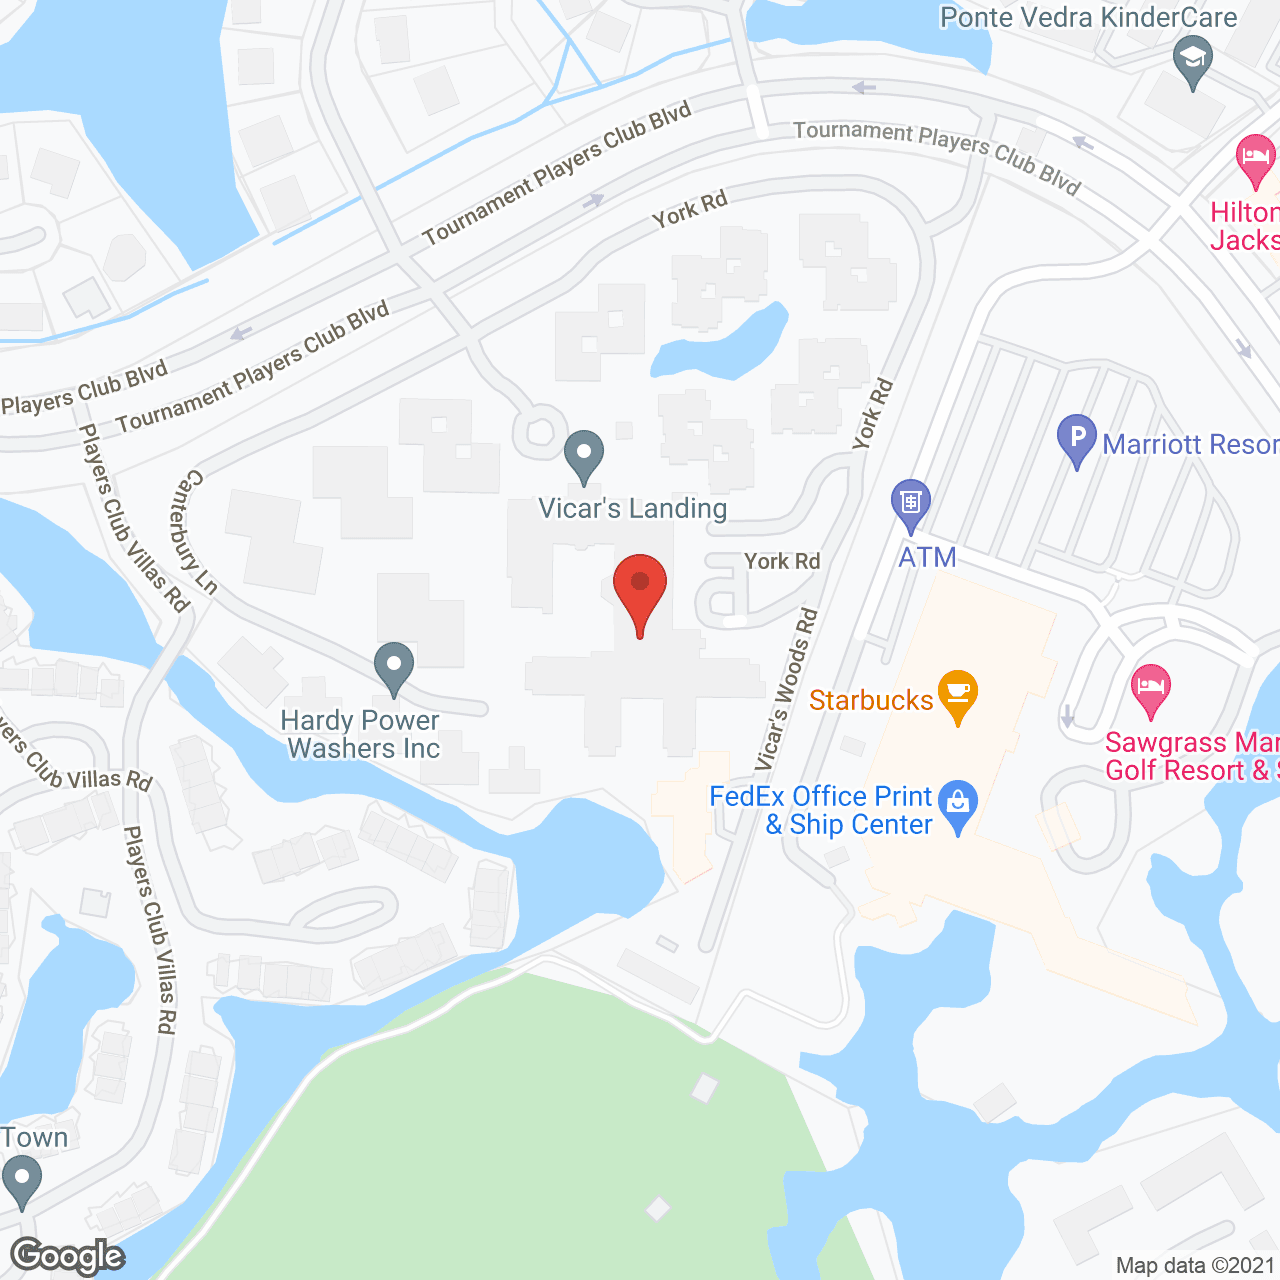 Vicar's Landing At Ponte Vedra in google map